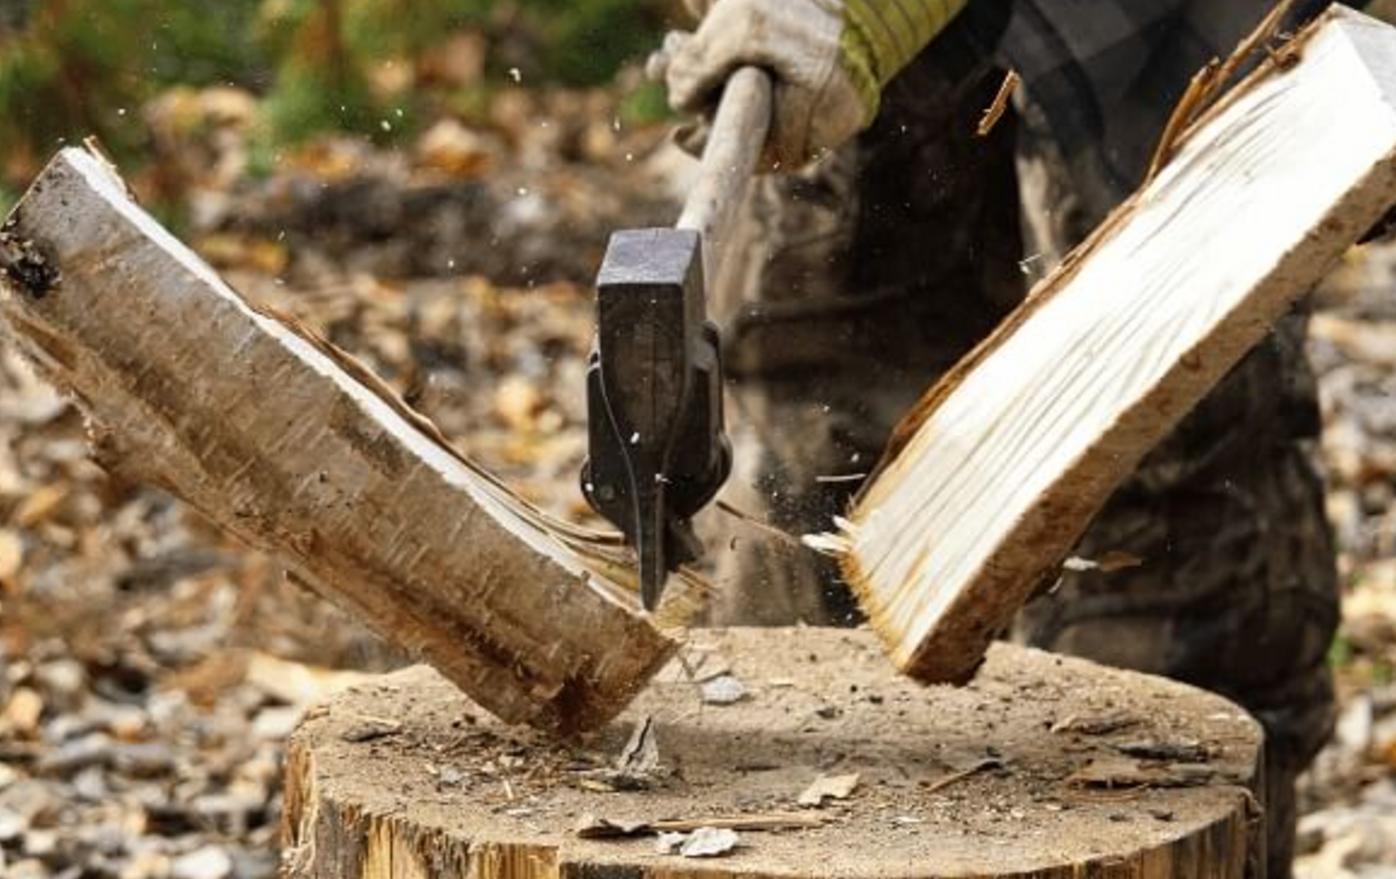 An axe coming down chopping hardwood firewood